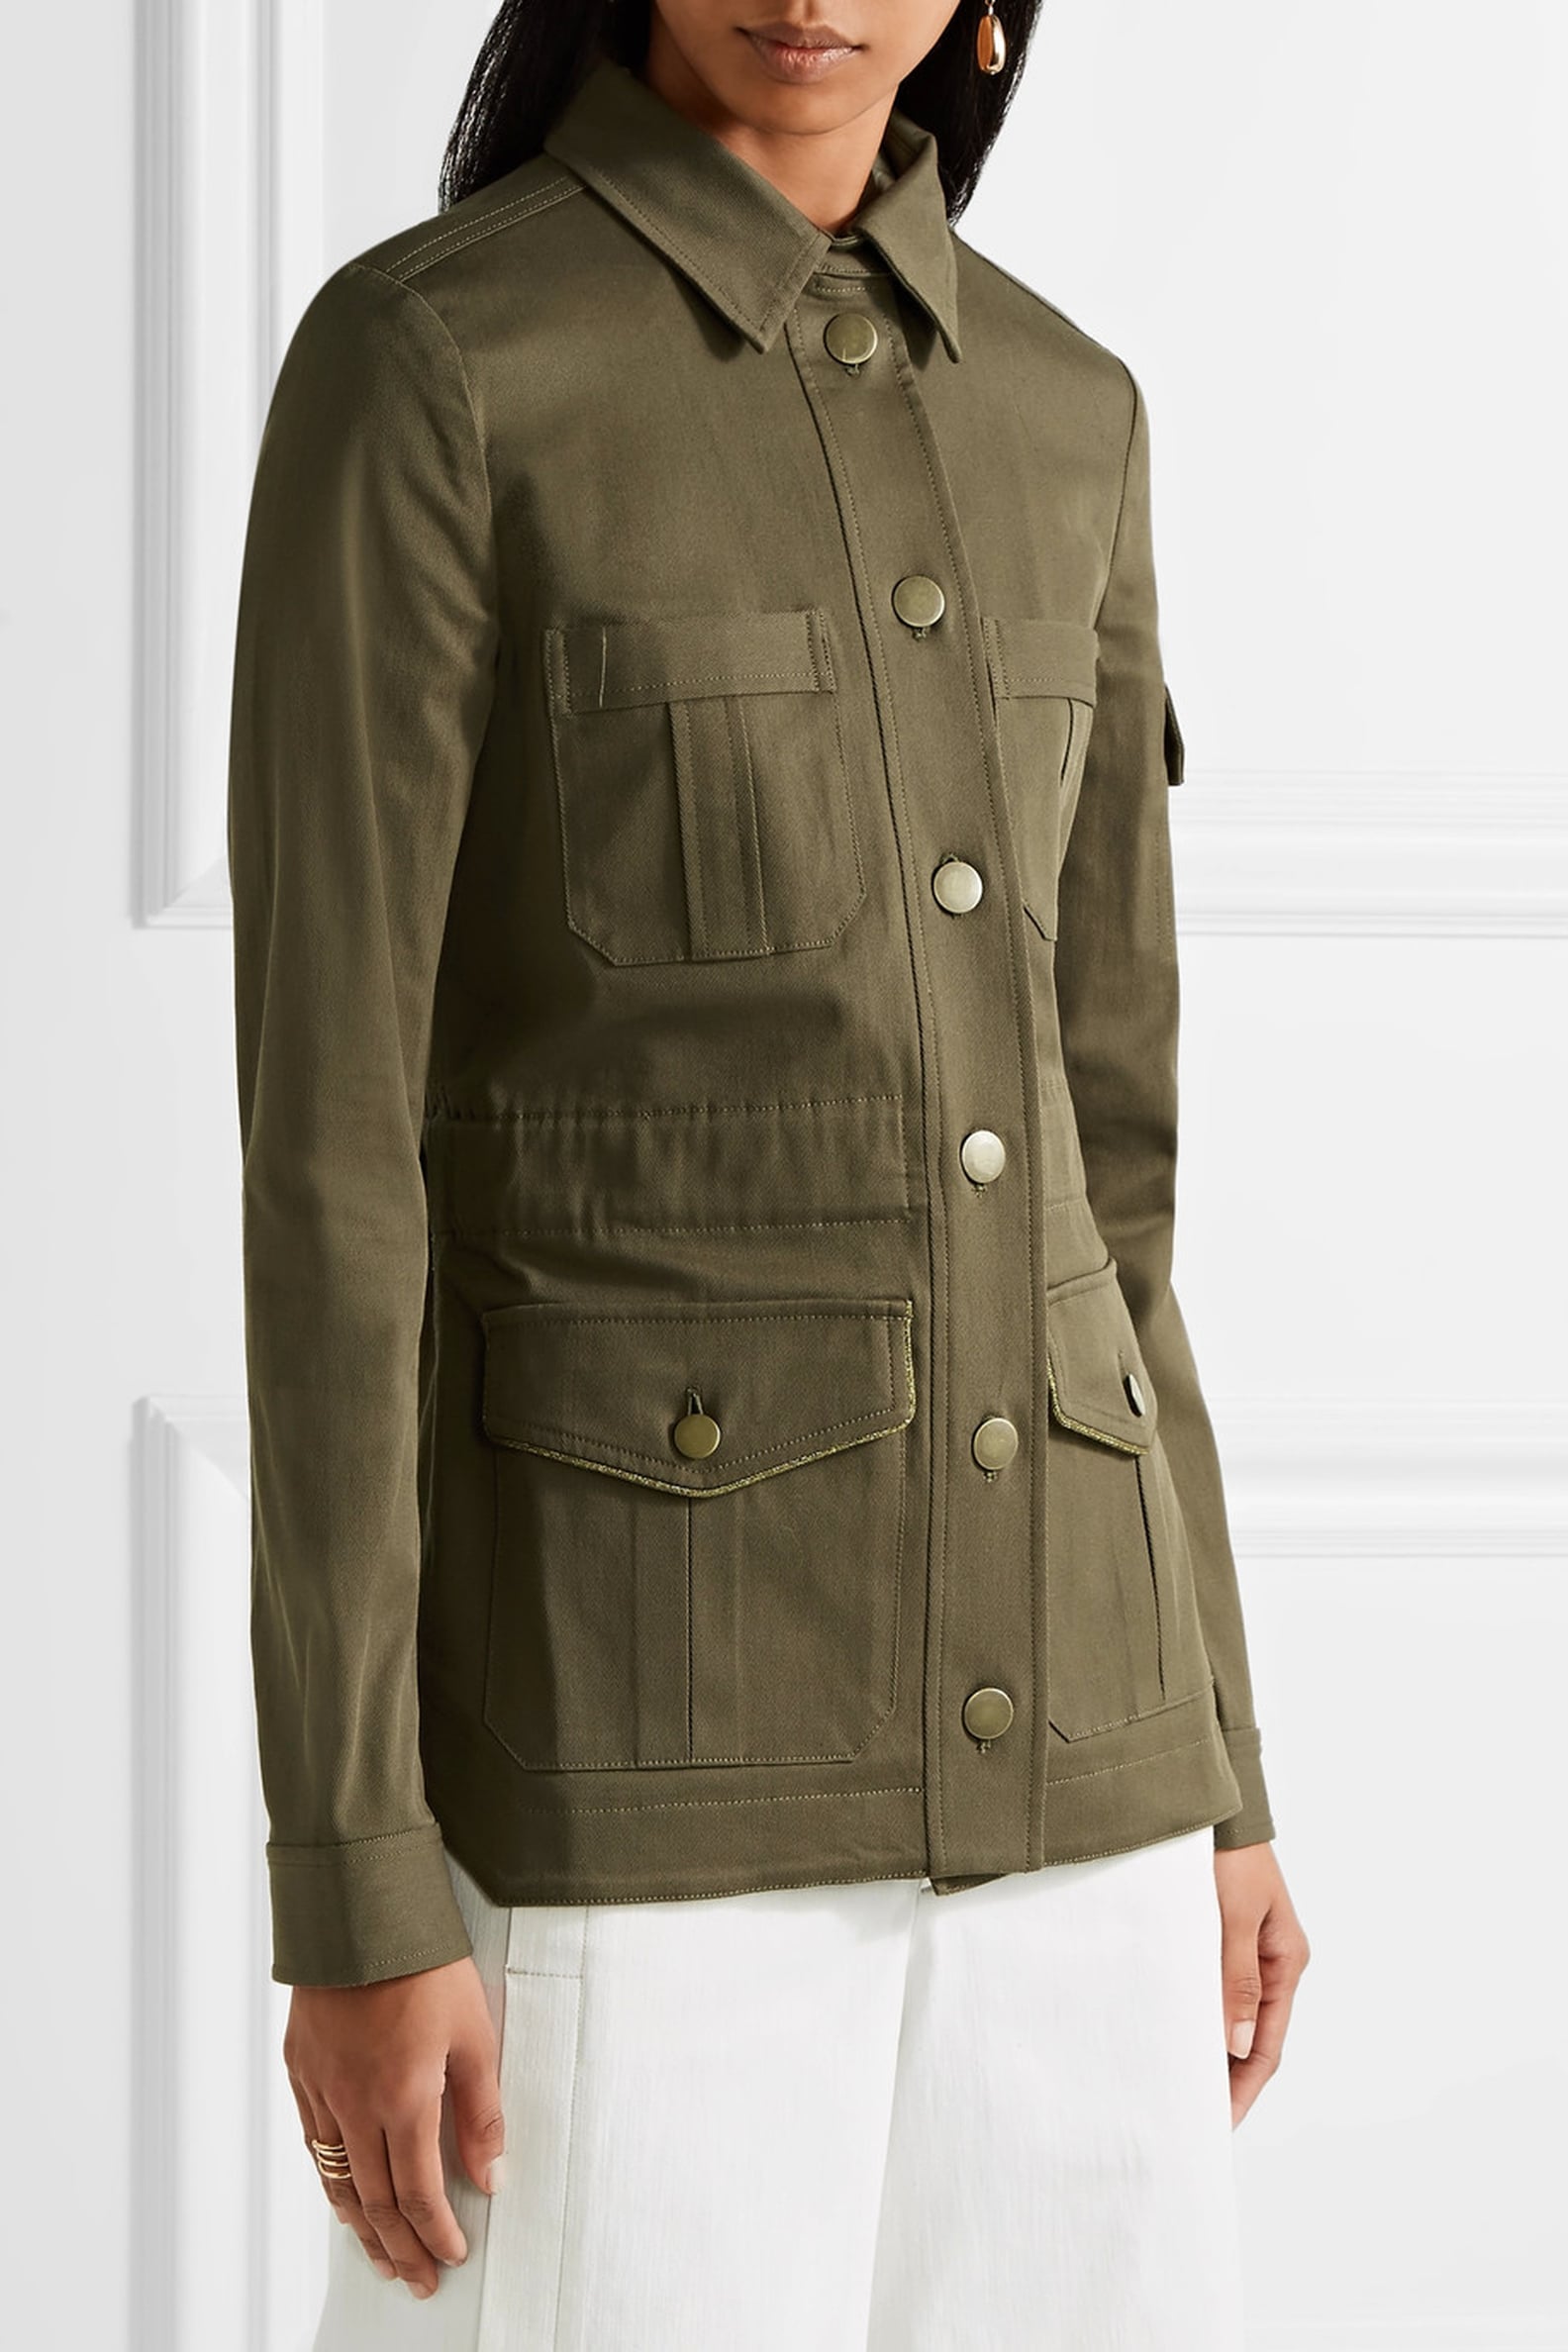 Melania Trump Veronica Beard Military Jacket | POPSUGAR Fashion